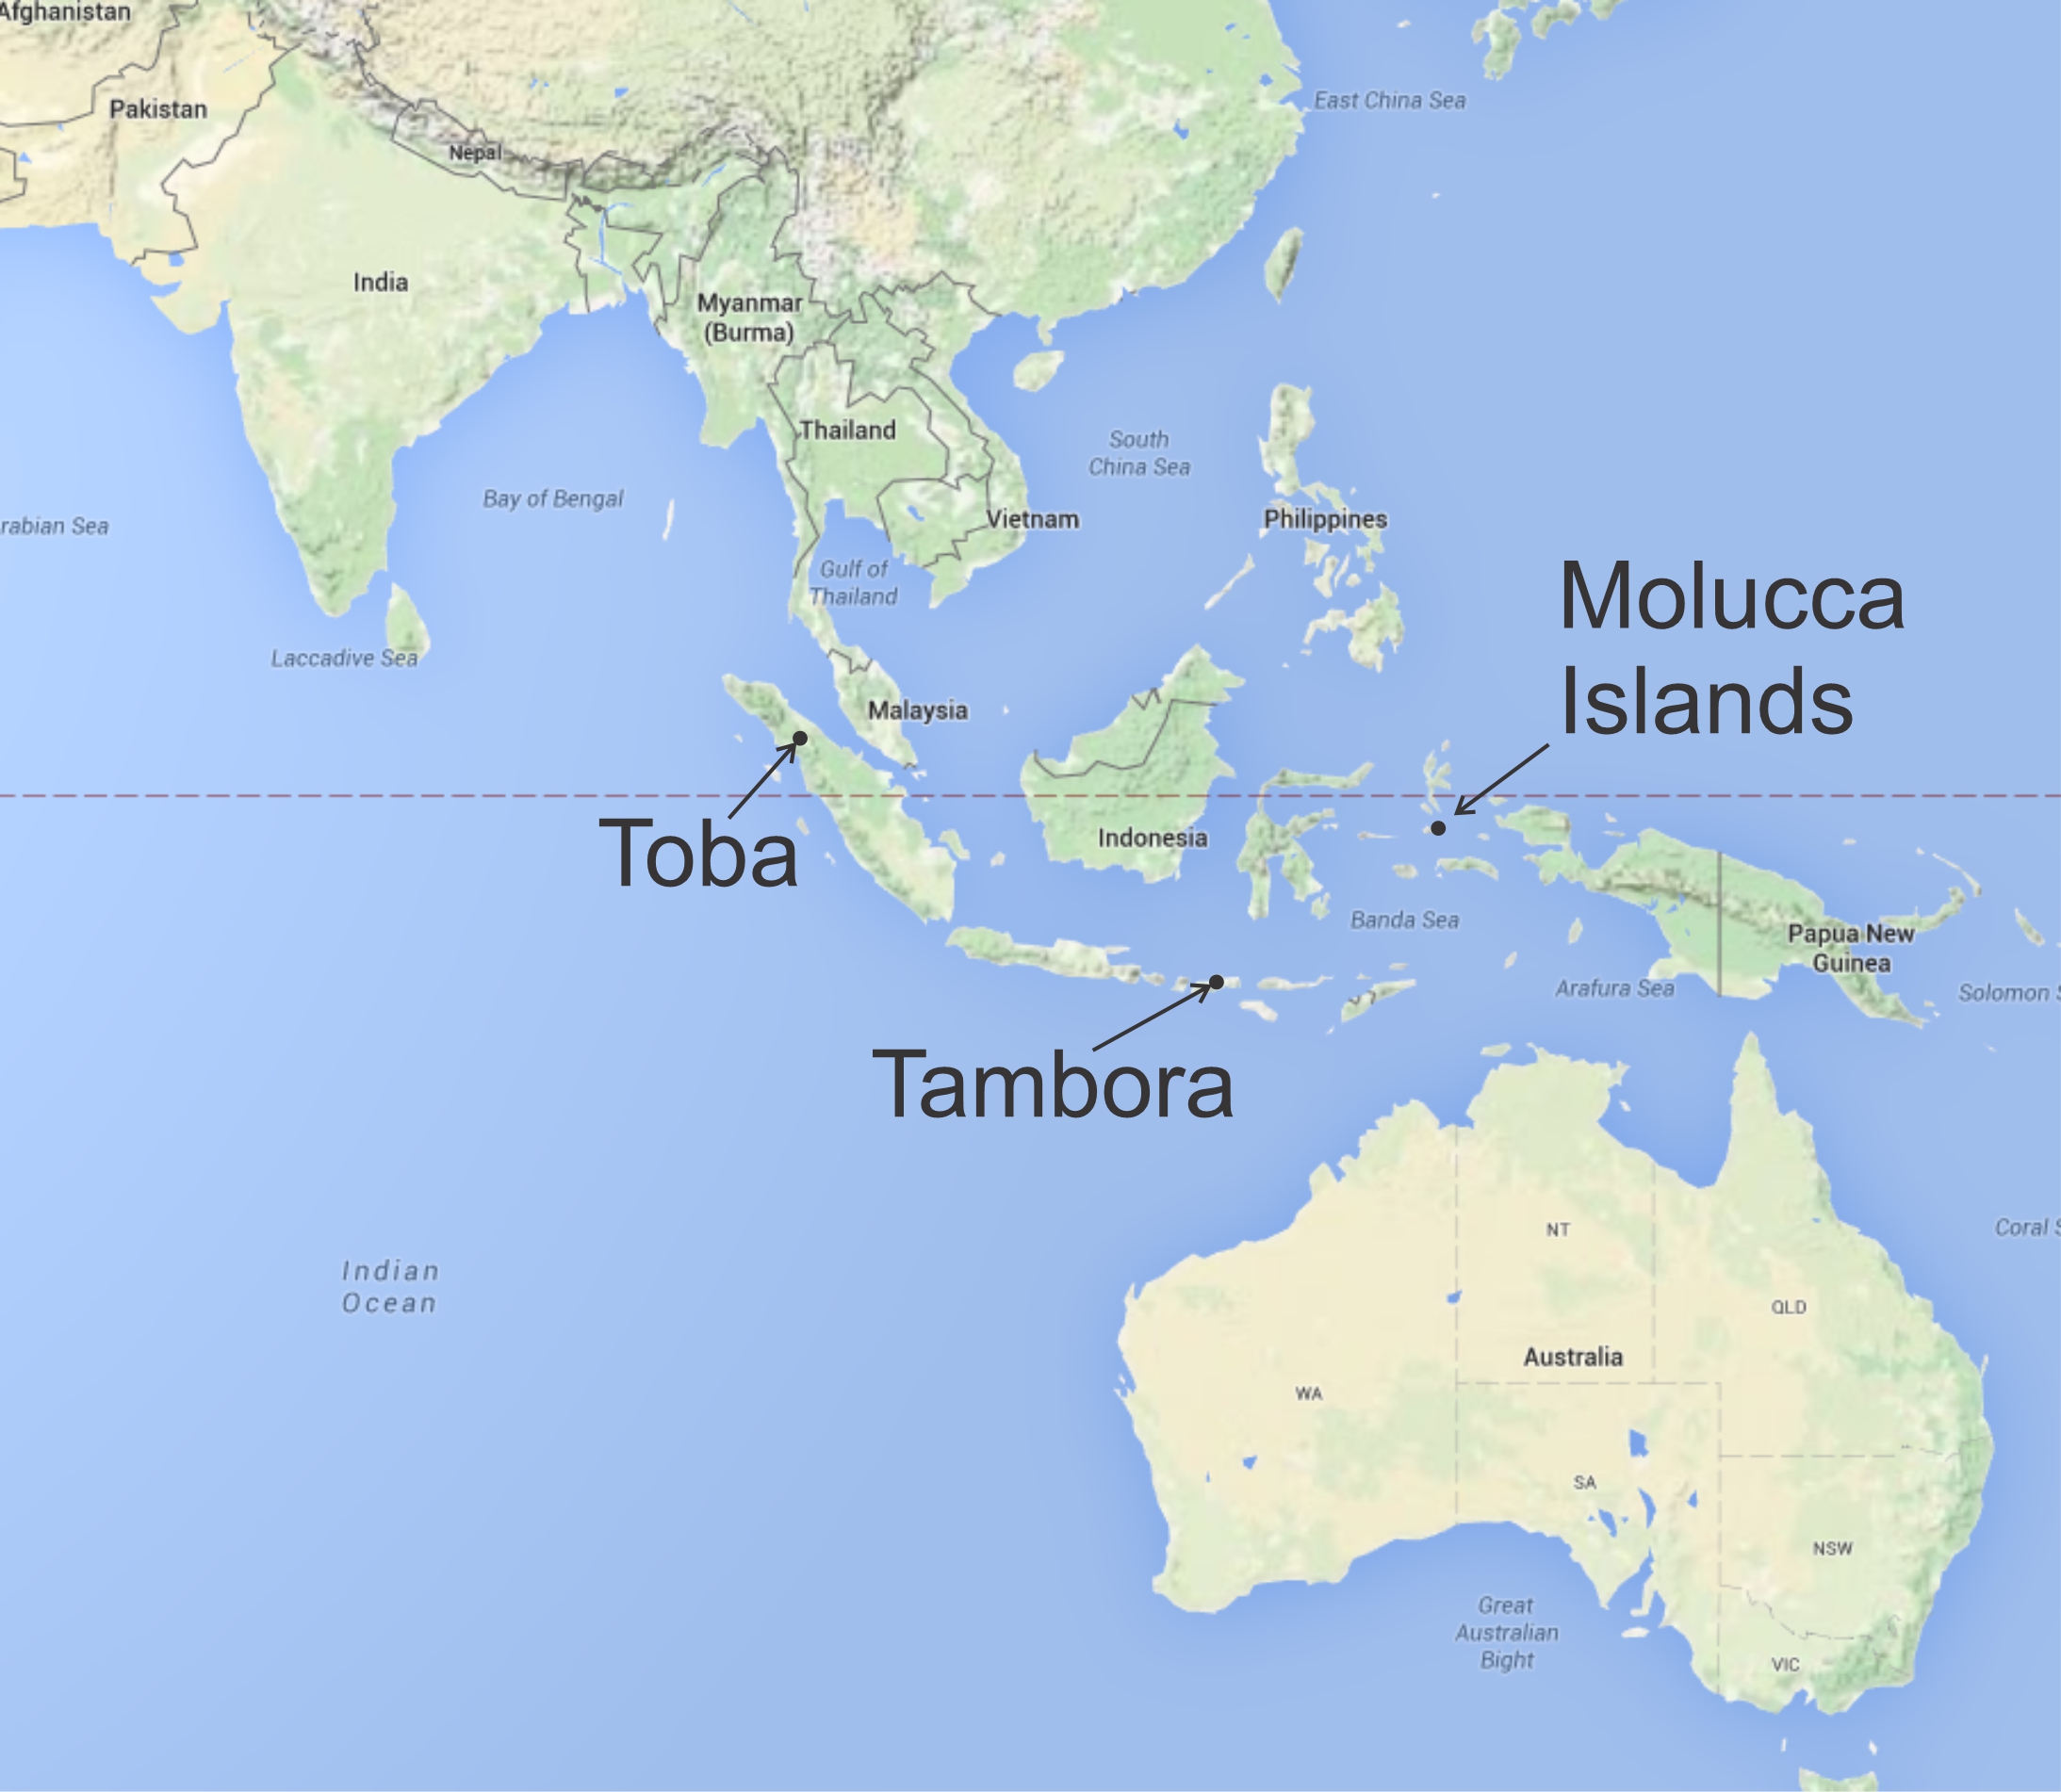 mount tambora map